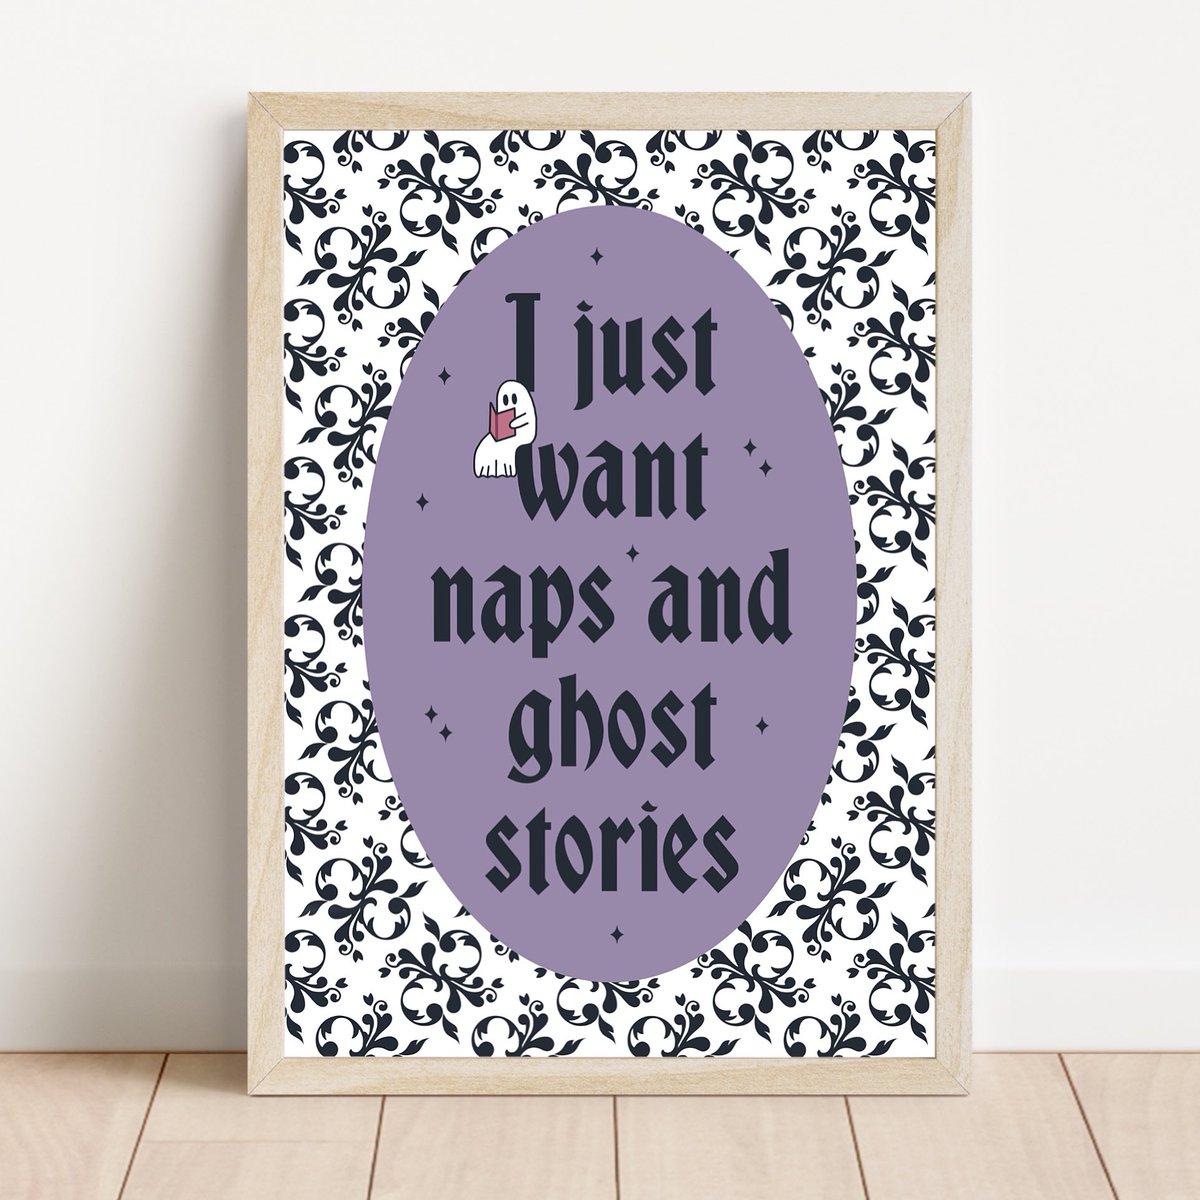 Naps and Ghost Stories Print 💜👻📚 #handmadehour #ghosts #reading #halloween #spooky #handmade #etsyuk #etsyshop #giftideas #shopindie heatherwdesigns.etsy.com/listing/167704…